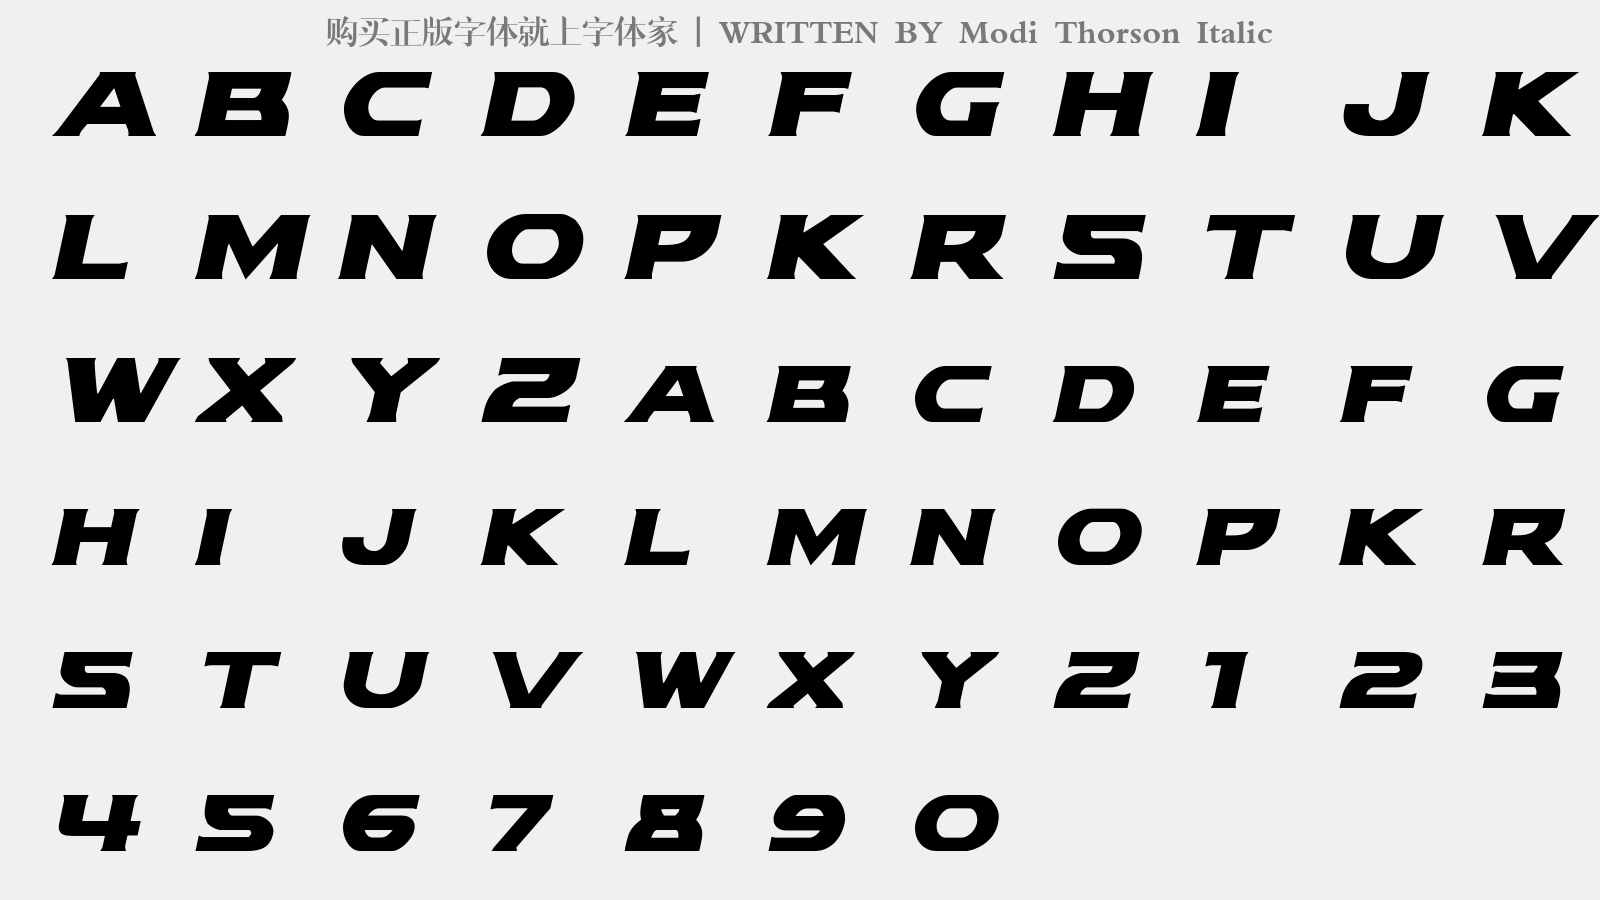 Modi Thorson Italic - 大写字母/小写字母/数字